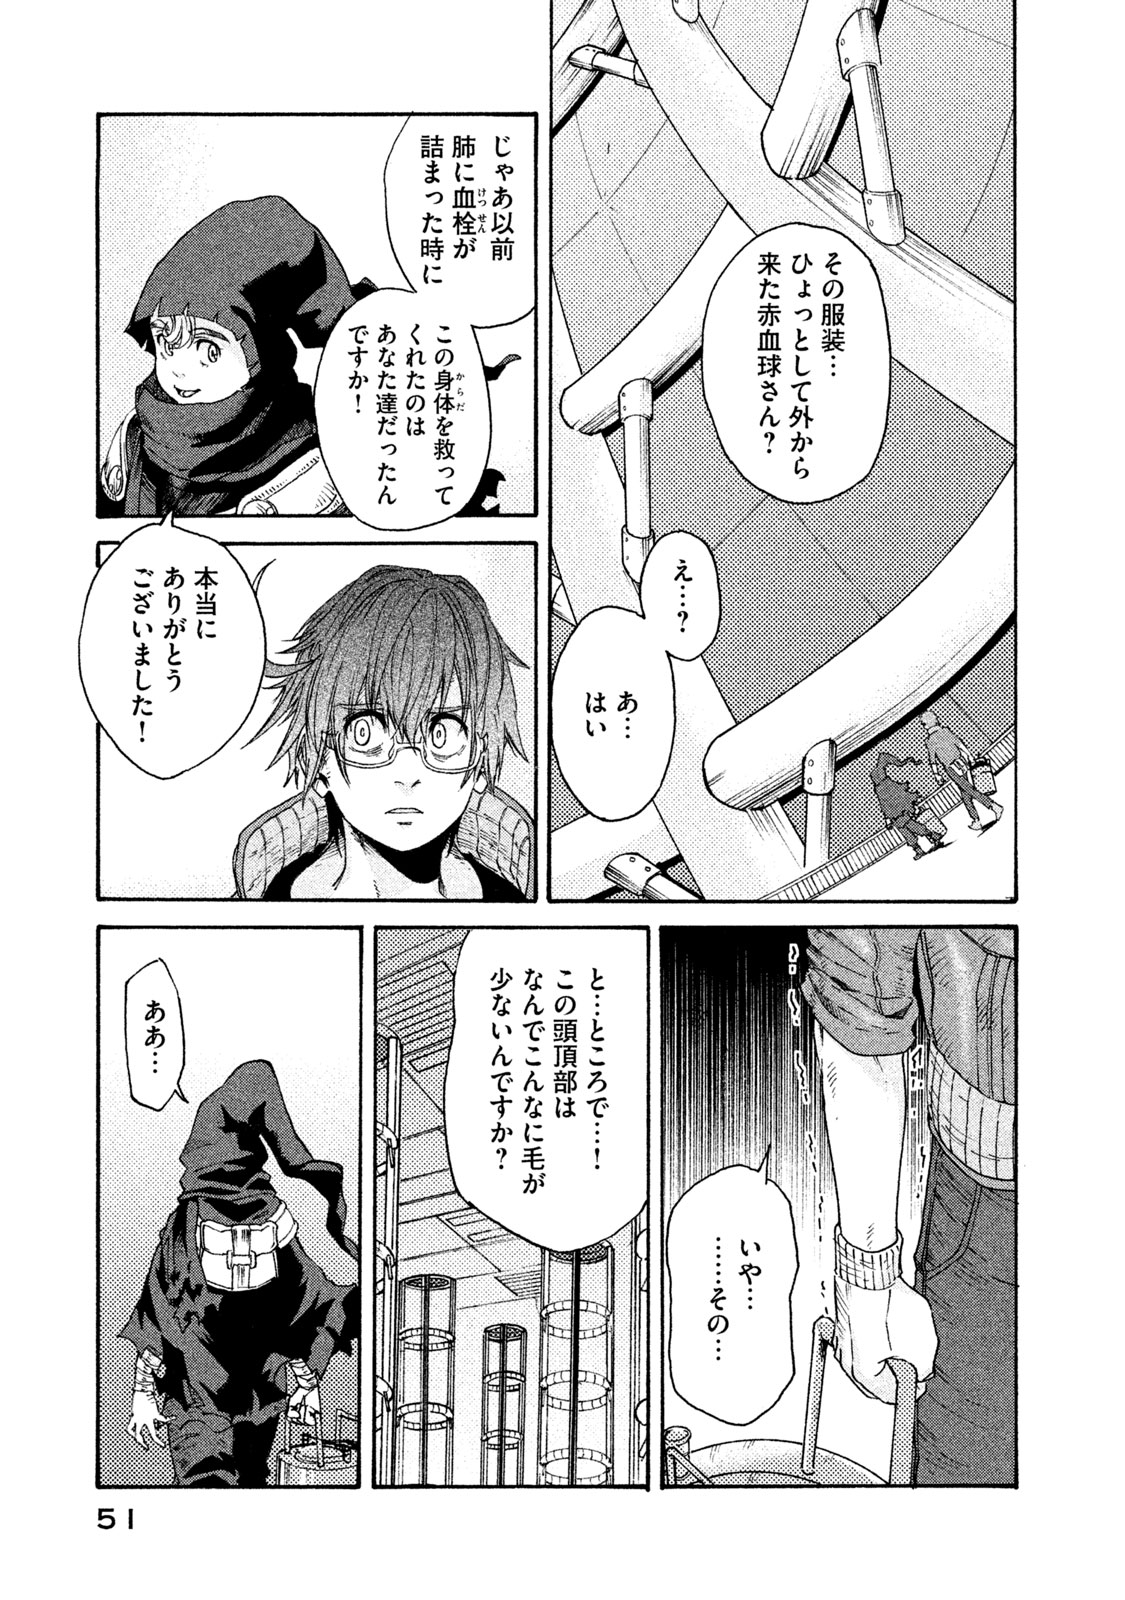 Hataraku Saibou BLACK - Chapter 20 - Page 7